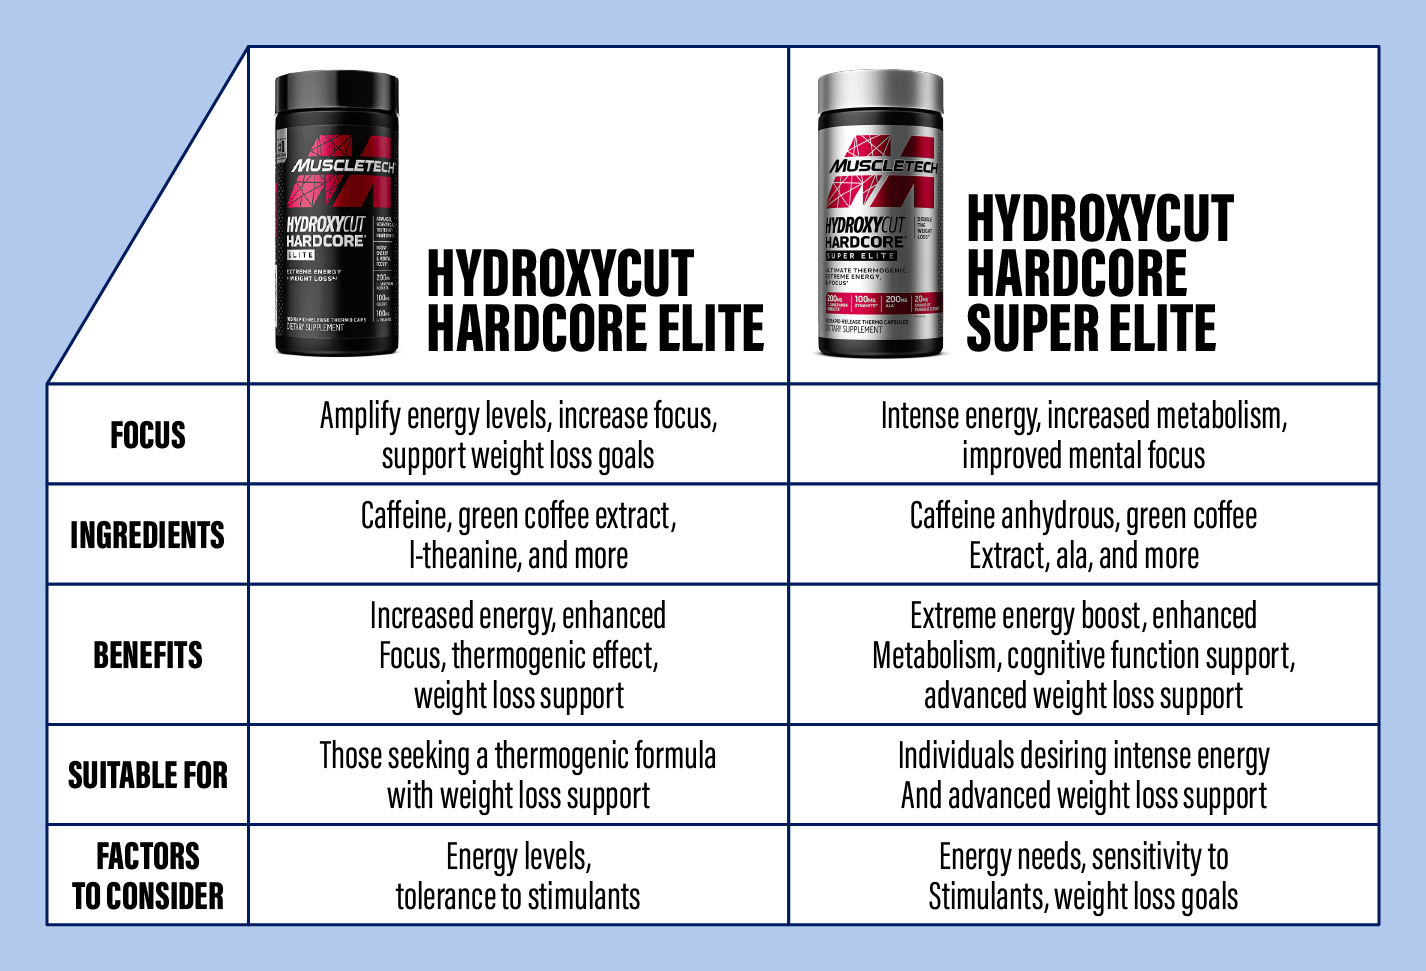 Hydroxycut Hardcore Elite vs. Hydroxycut Hardcore Super Elite: Choosing the Right Weight Loss Supplement